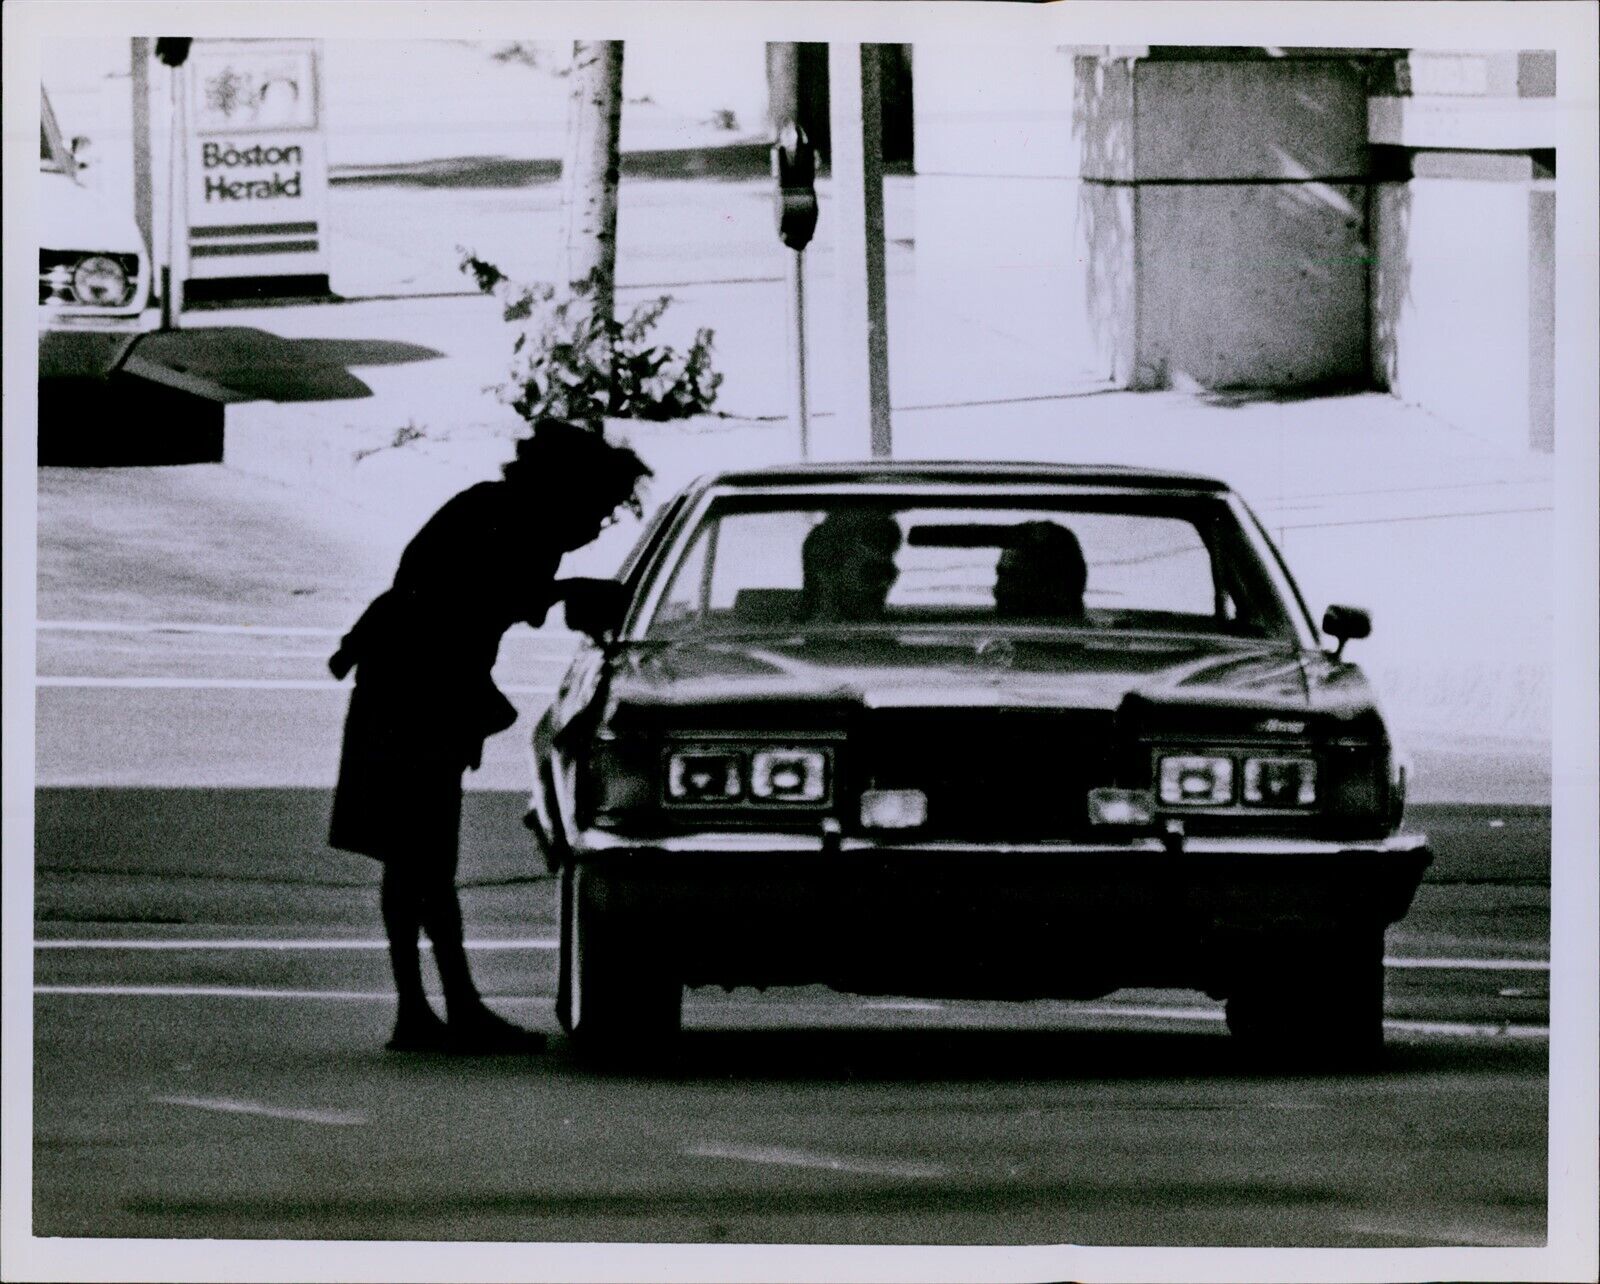 LG874 1987 Original Photo BOSTON WORKING GIRL Leaning into Car Hooker Prostitute